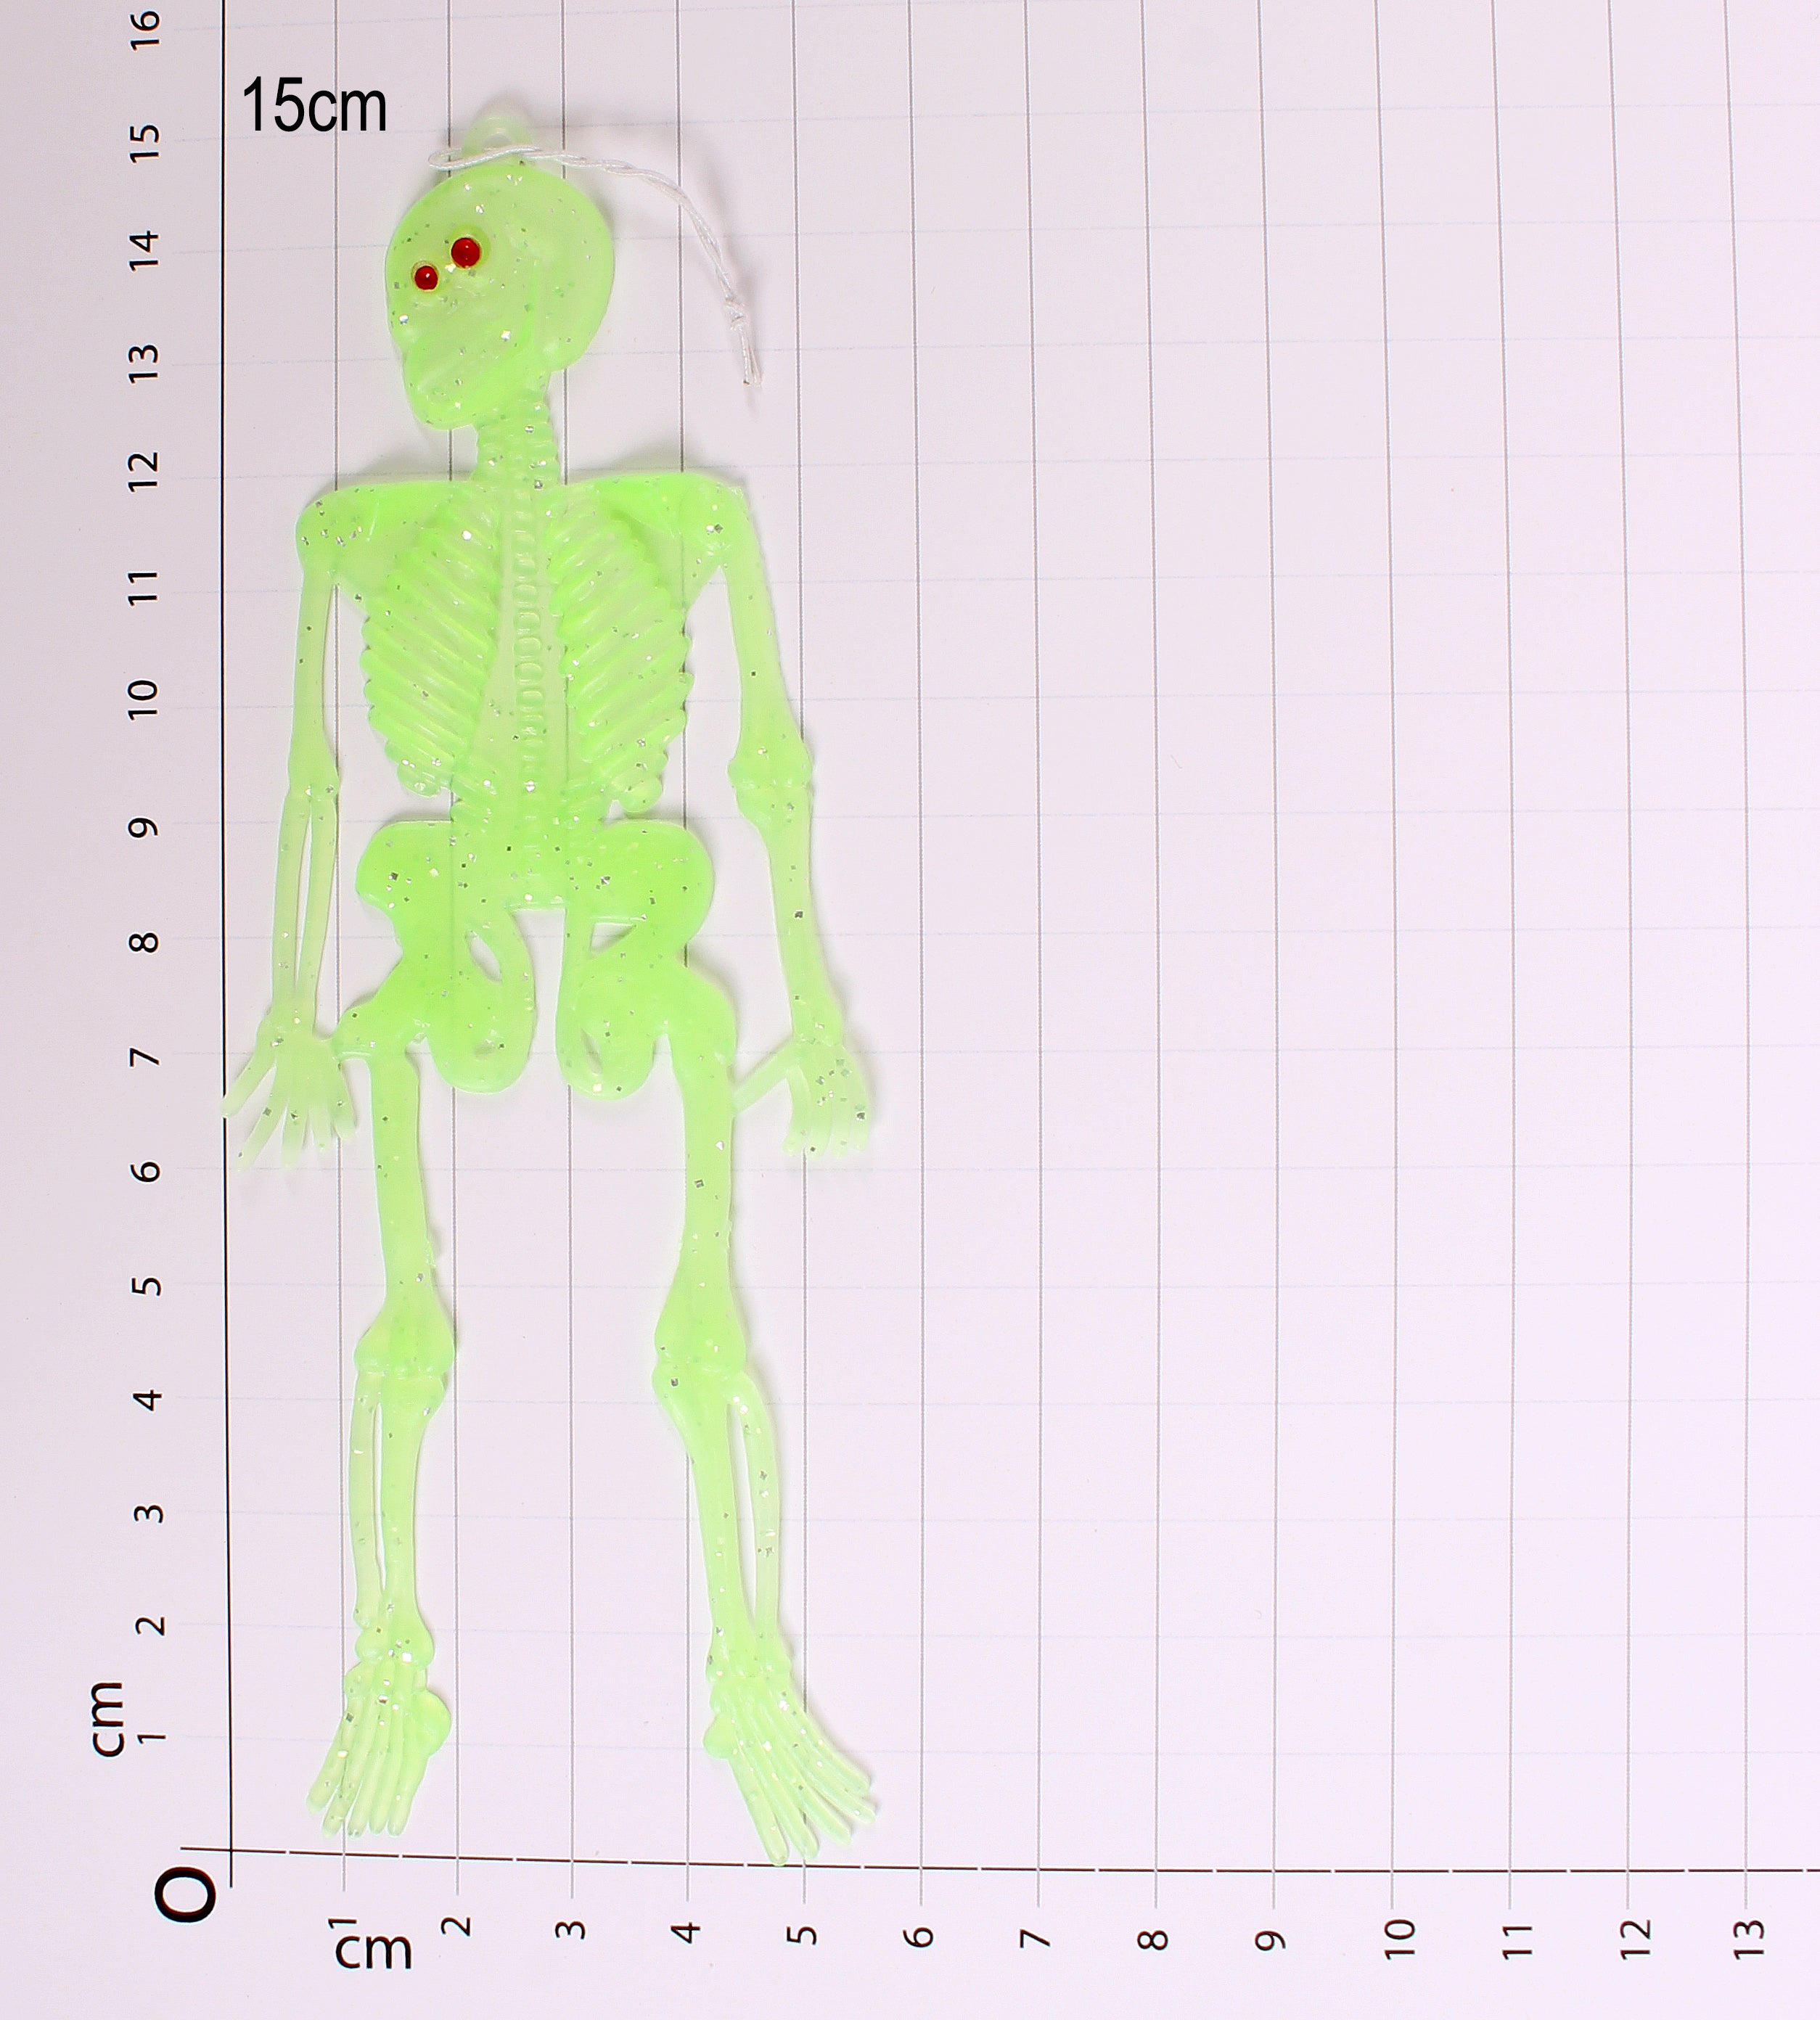 Skeleton 15cm - Green 10pc